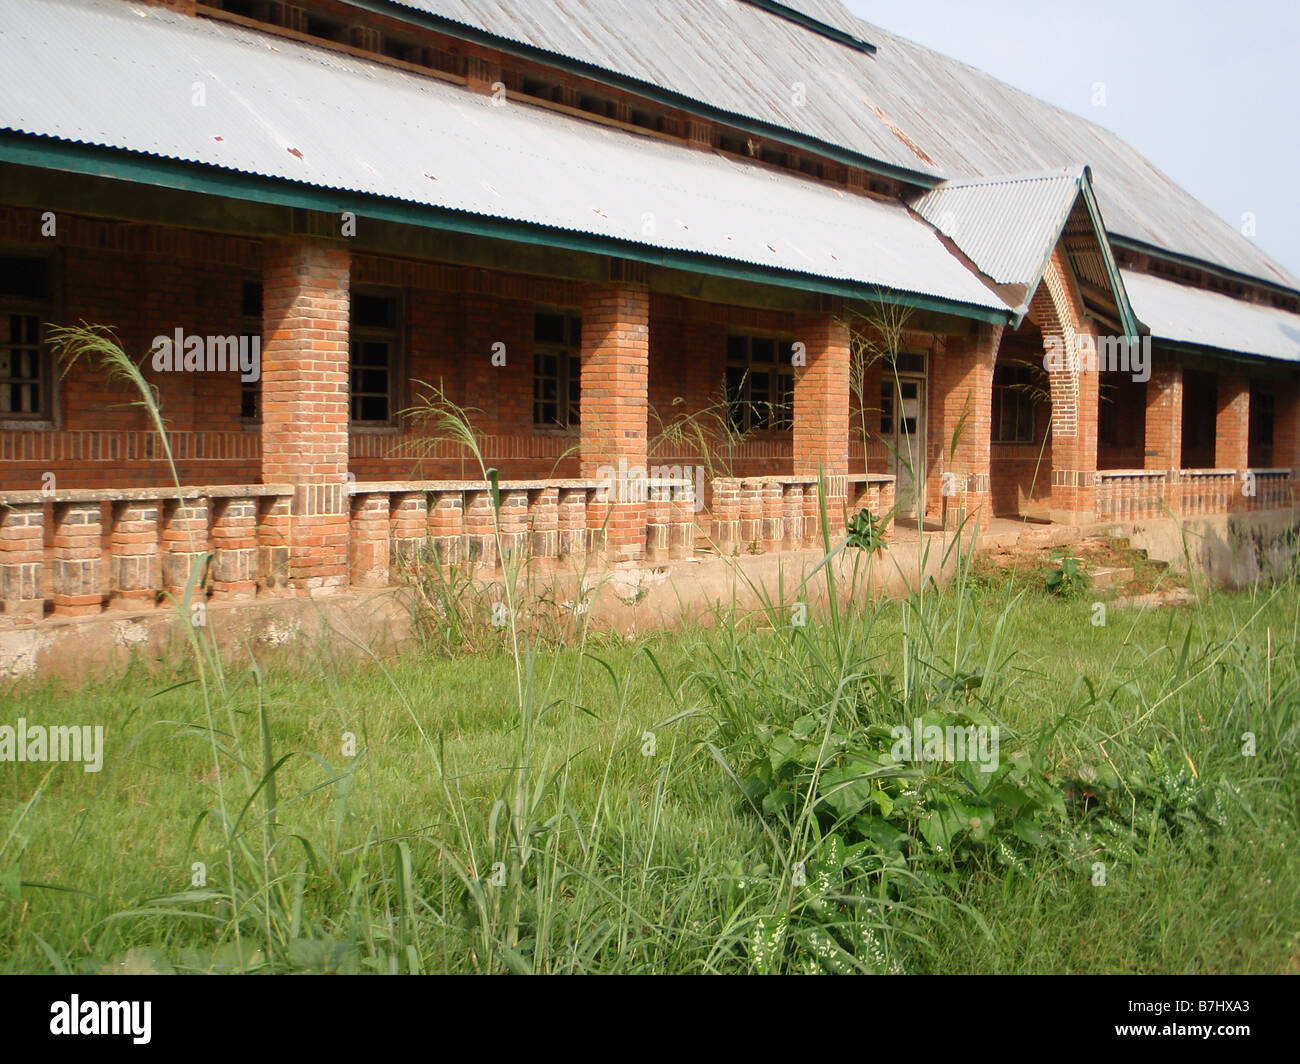 Old deserted Catholic Mission building of red brick with corrugated iron roof in Ubundu Democratic Republic of Congo Stock Photo